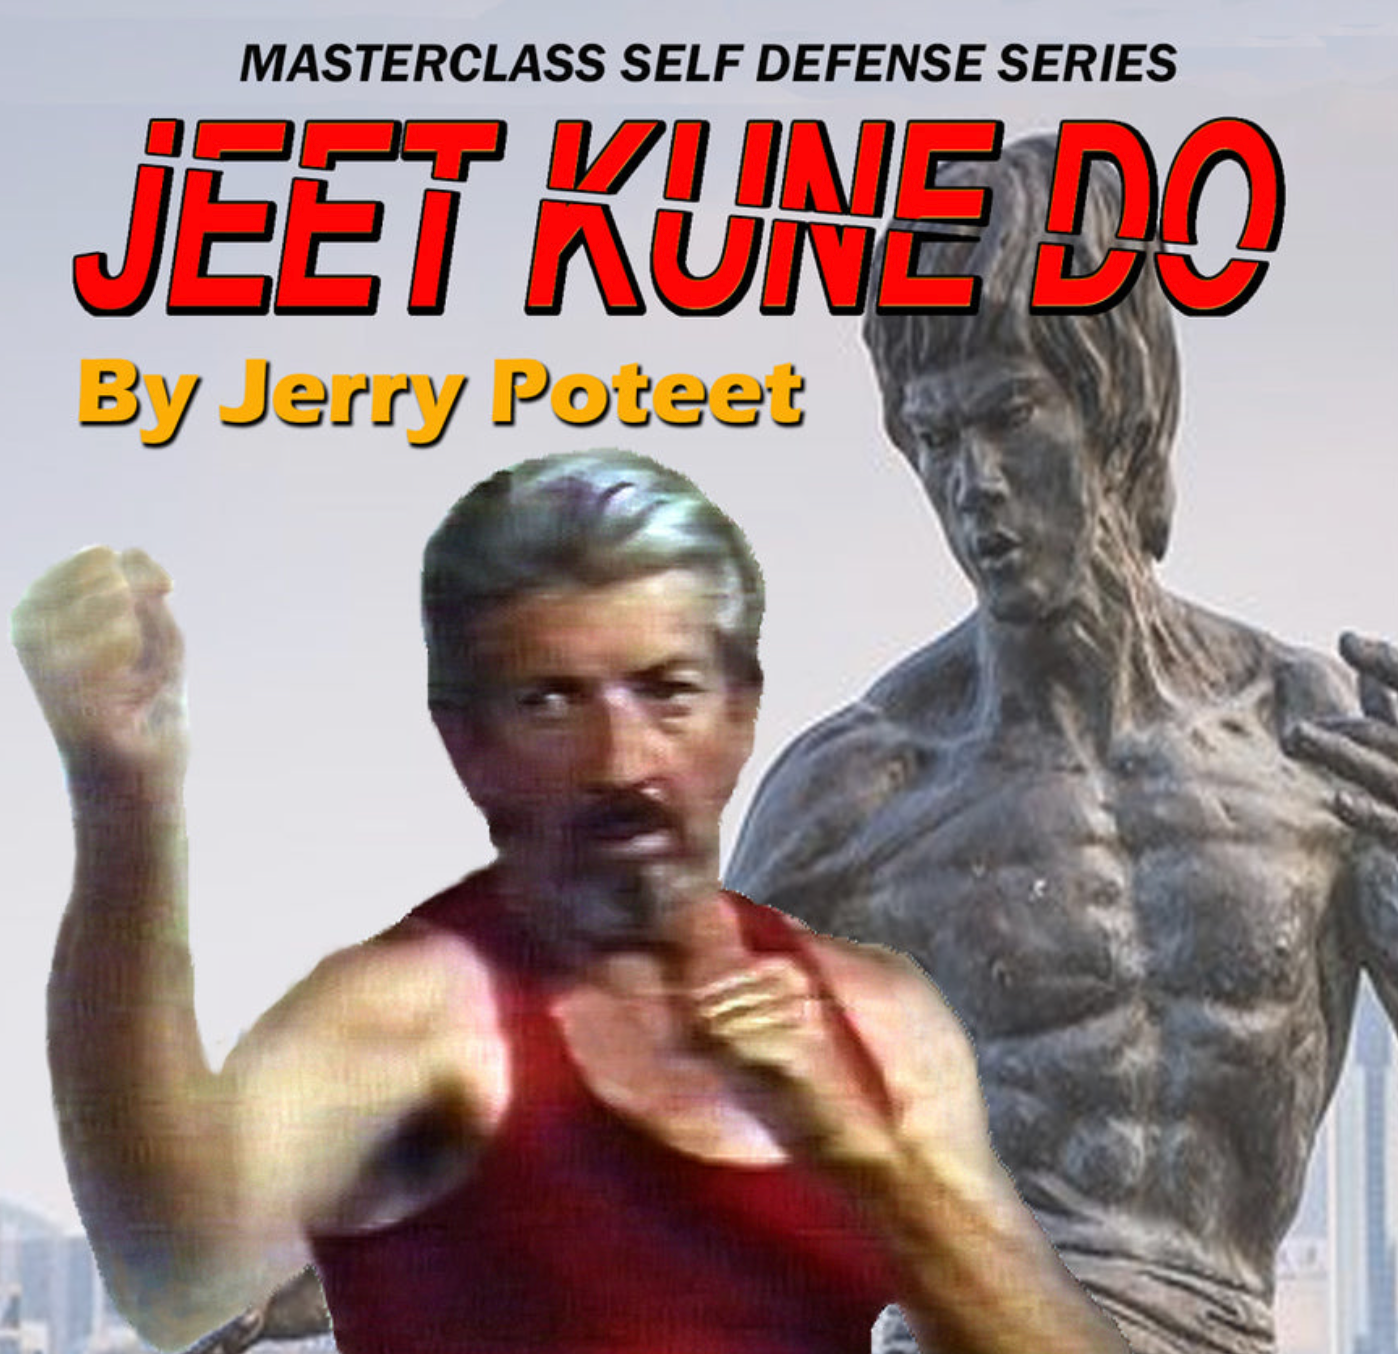 Serie Jeet Kune Do 6 Vol de Jerry Poteet (bajo demanda)